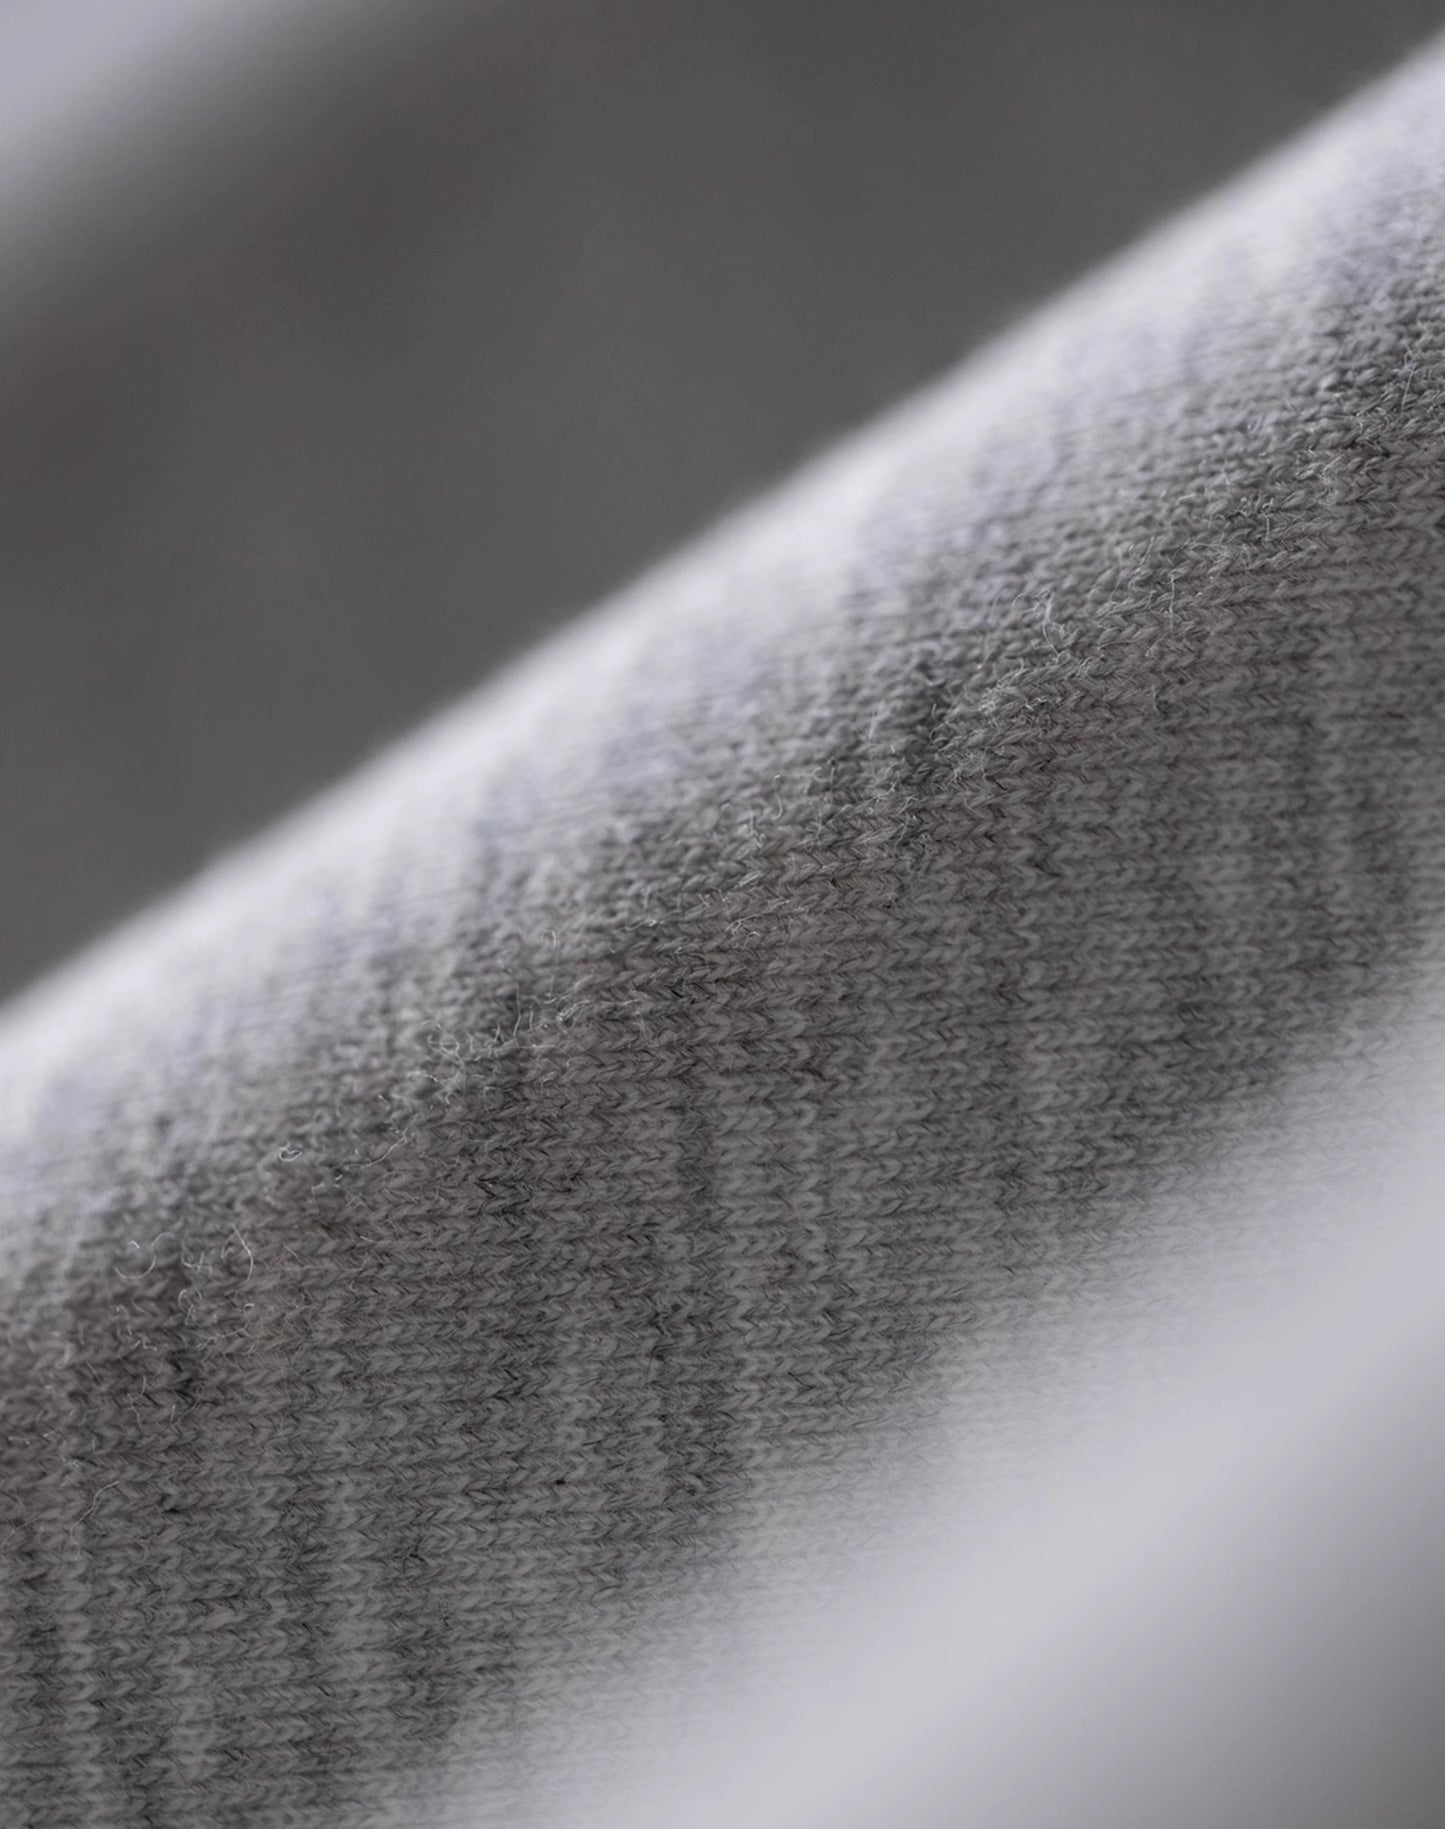 American Workwear Air Layer Half-Zip Spliced Men's Sweater